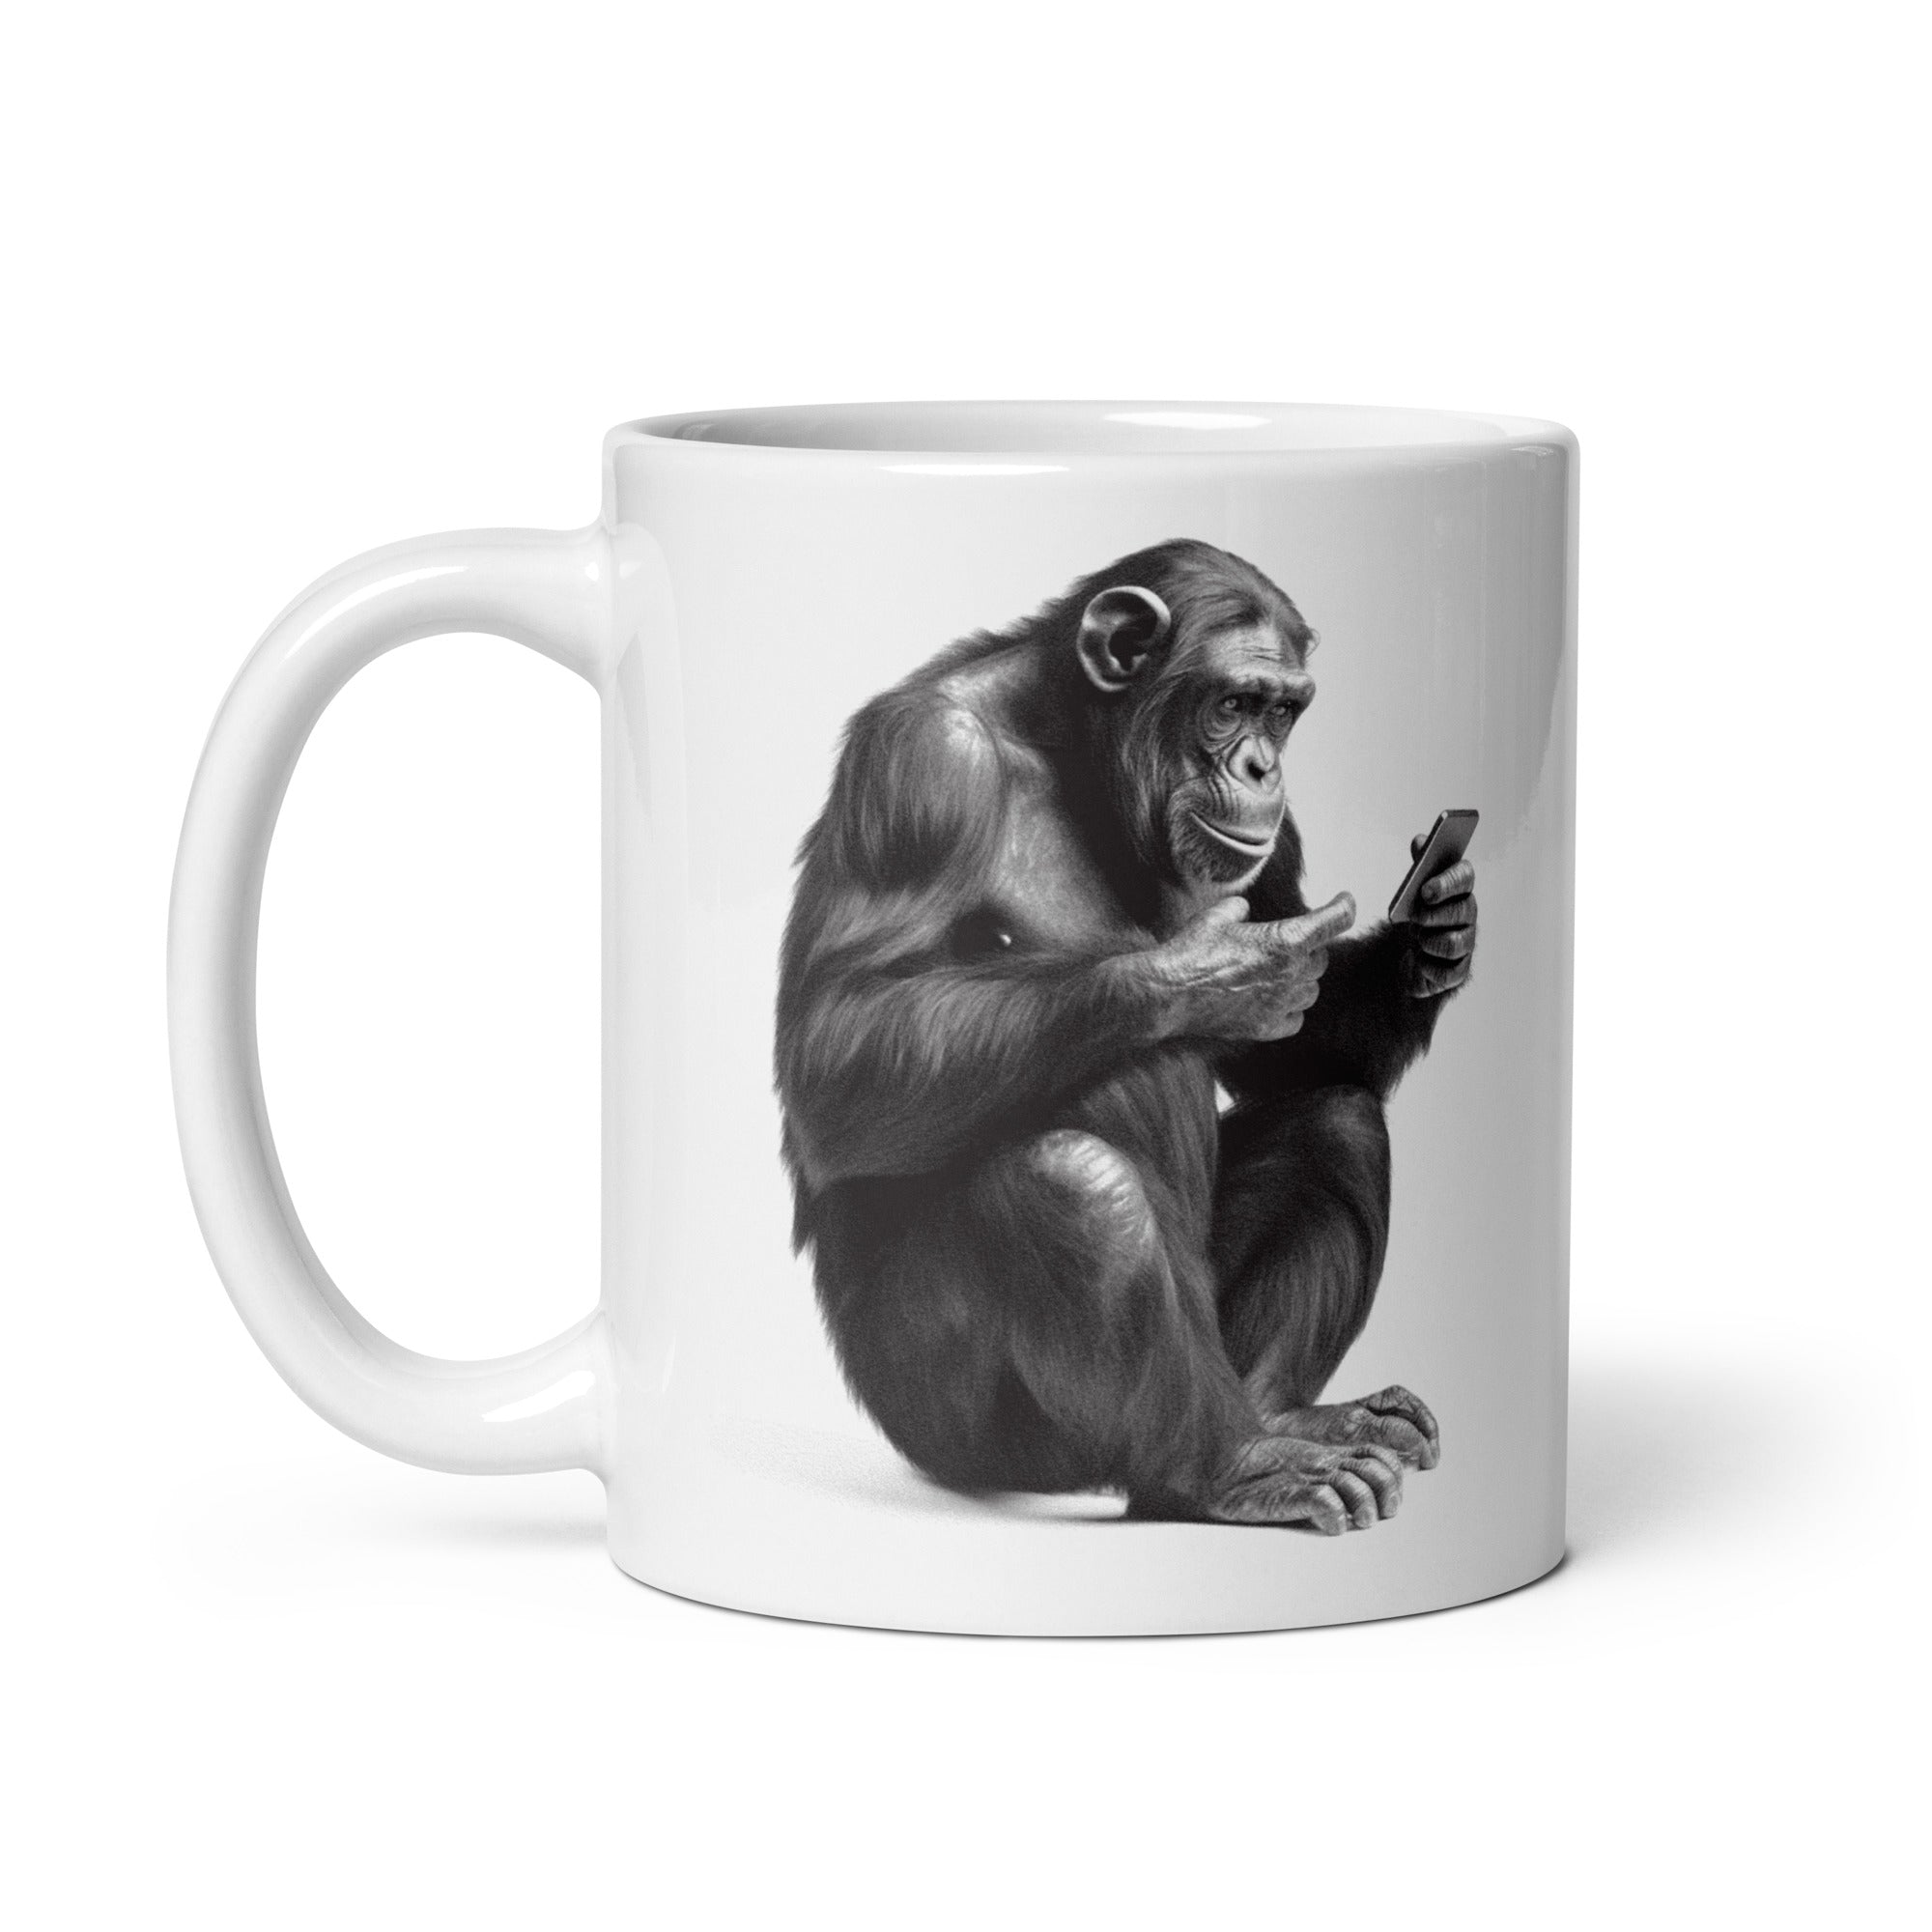 iChimp Coffee Mug